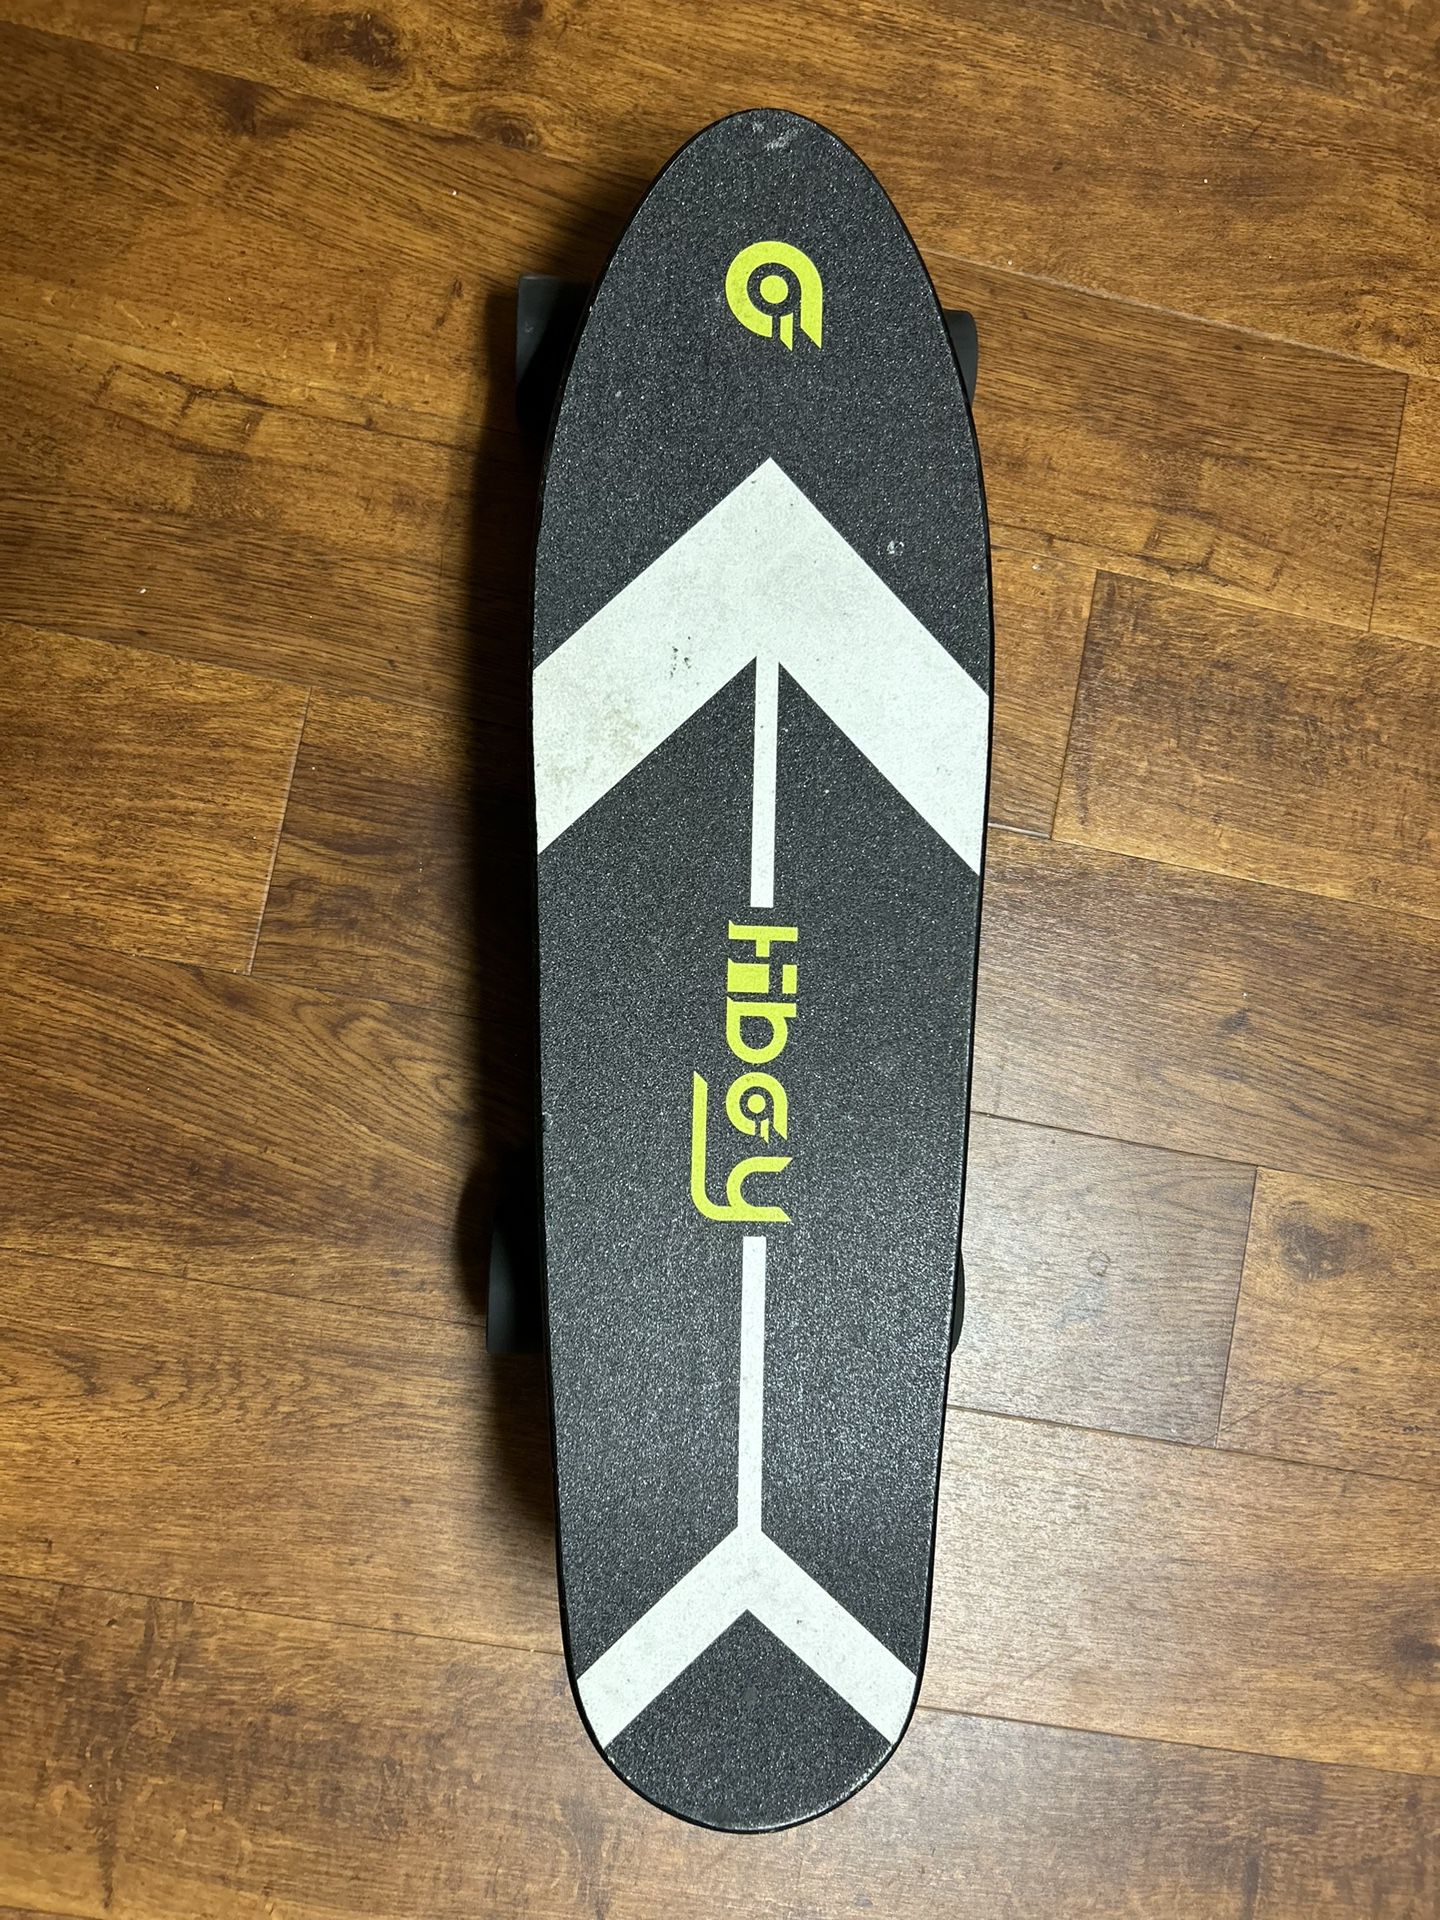 HiBoy Electric Skateboard